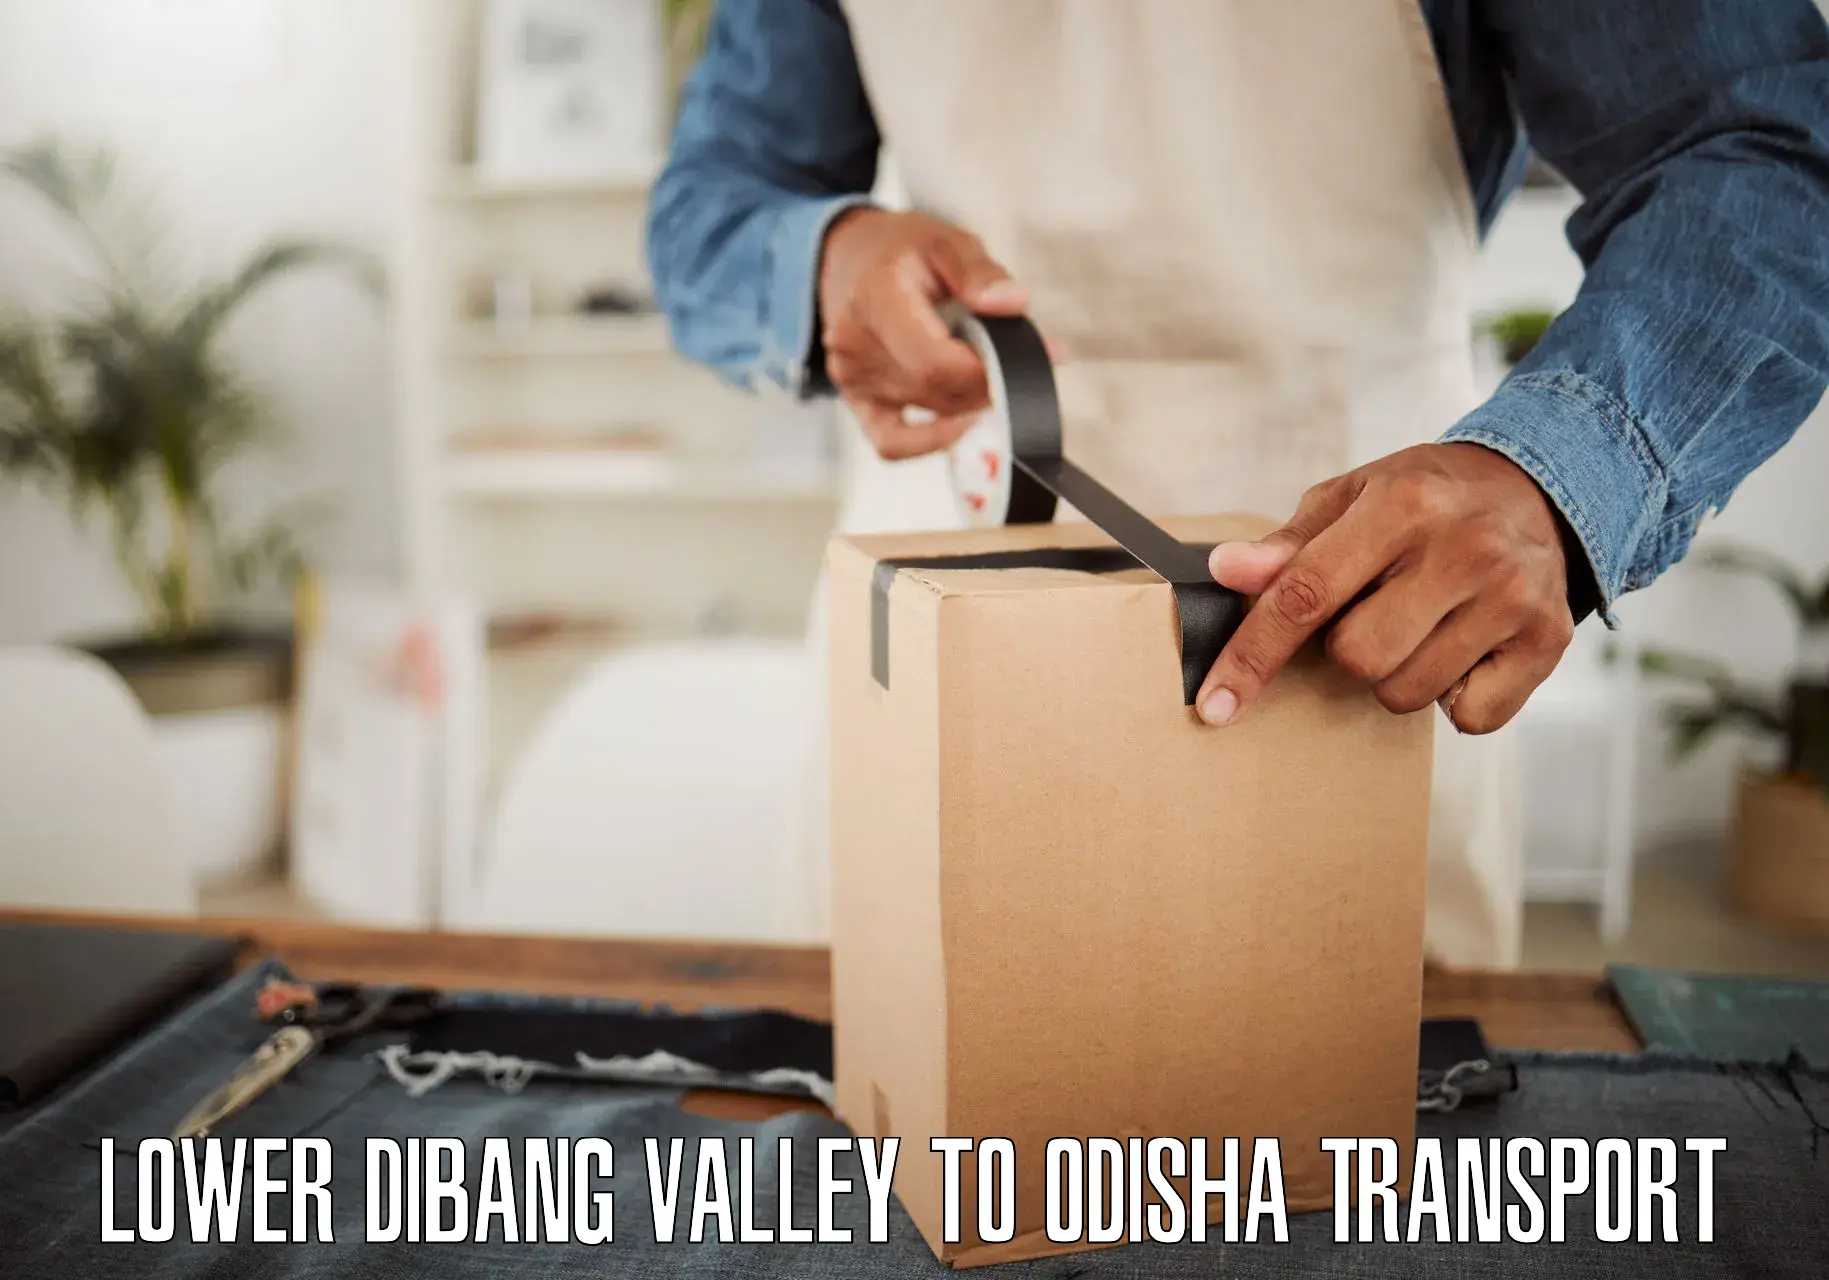 Transport in sharing Lower Dibang Valley to Ganjam